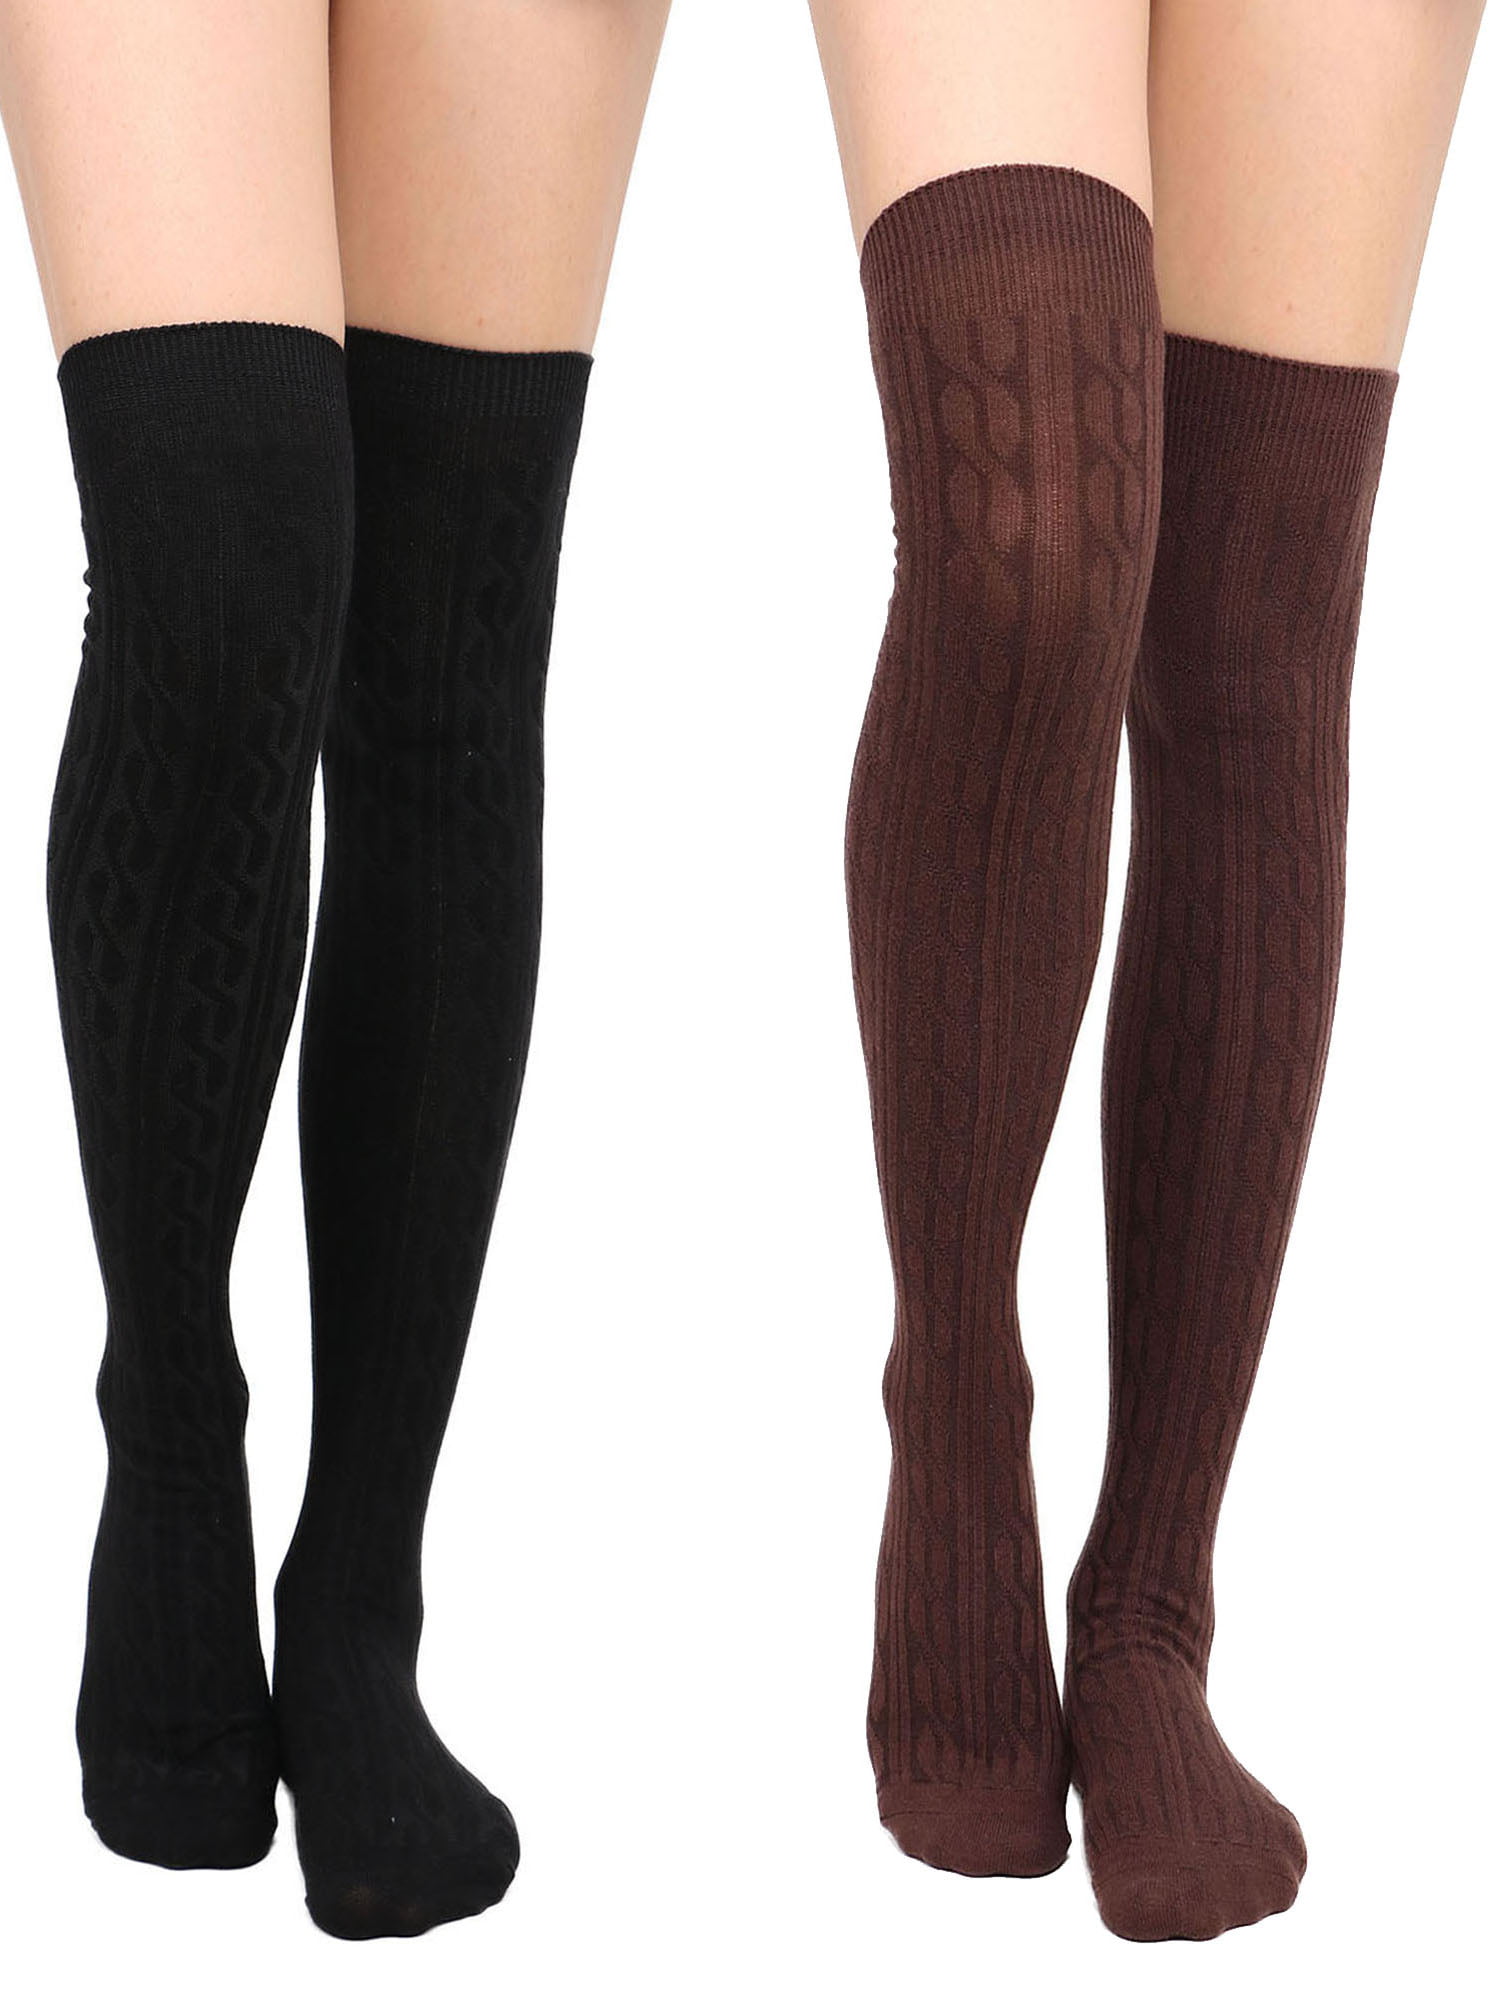 Thigh High Socks Women Soft Warm Knit Knee High Winter Socks 3 Packs